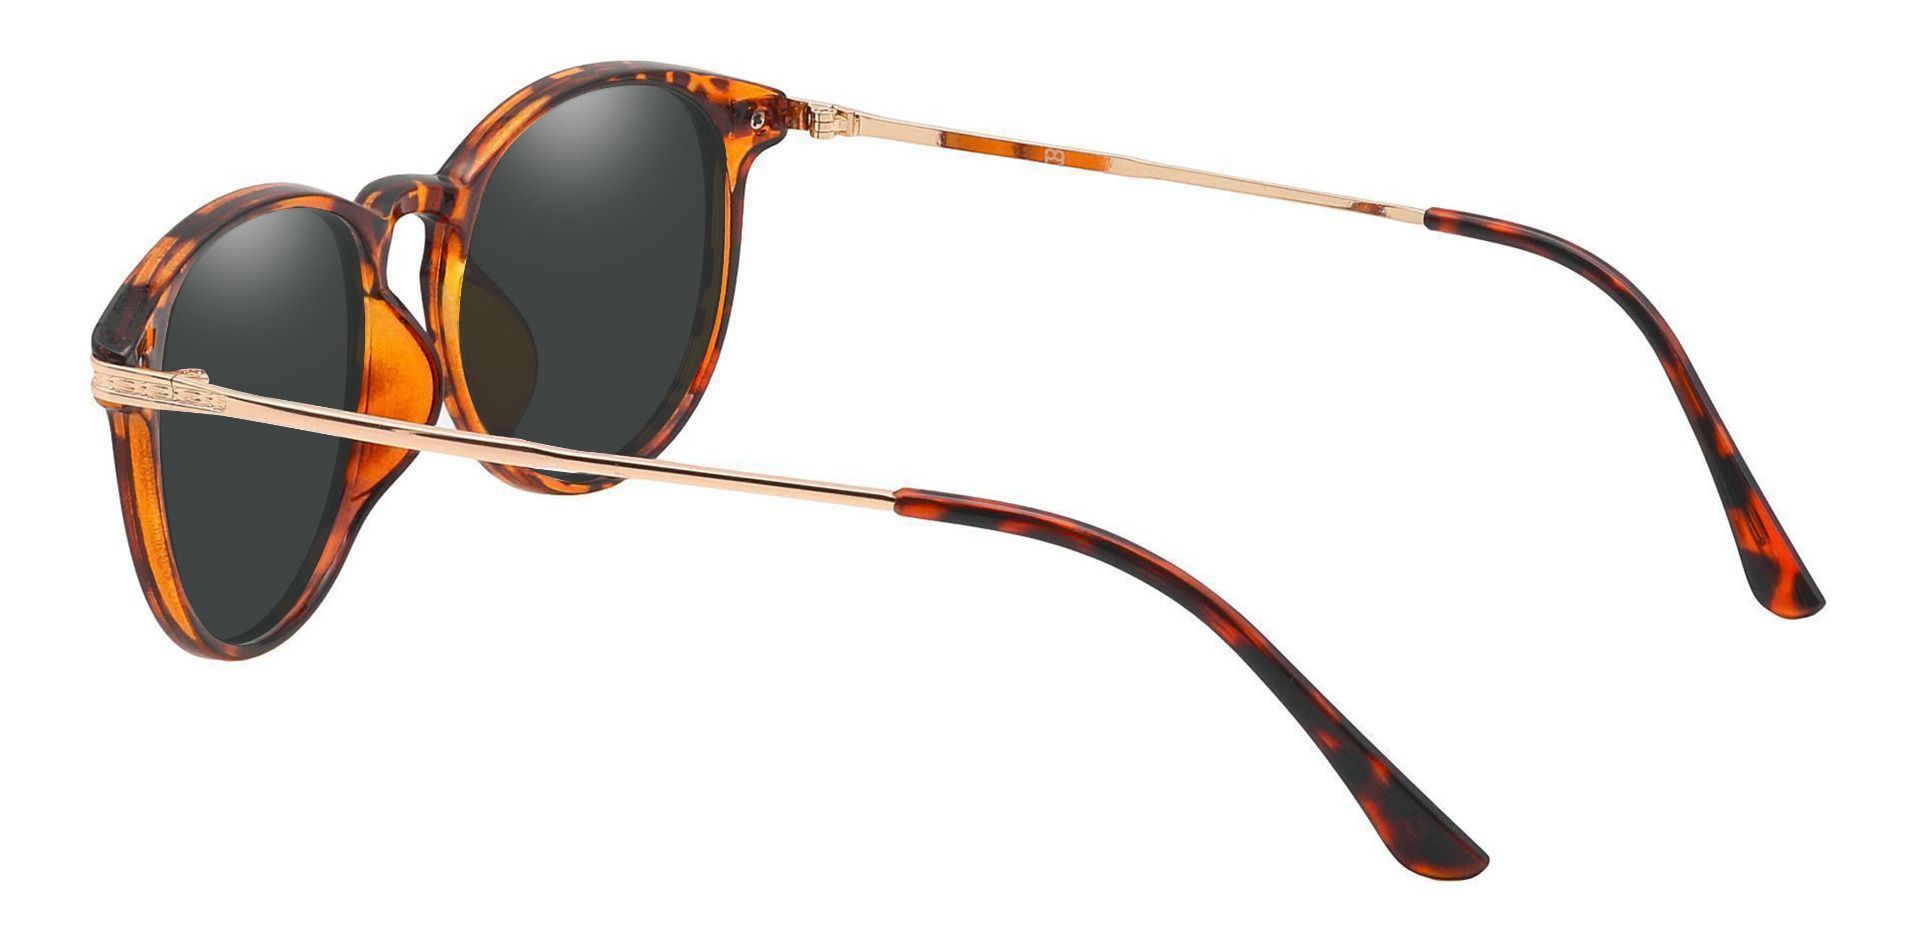 Rojo Round Prescription Sunglasses - Tortoise Frame With Gray Lenses